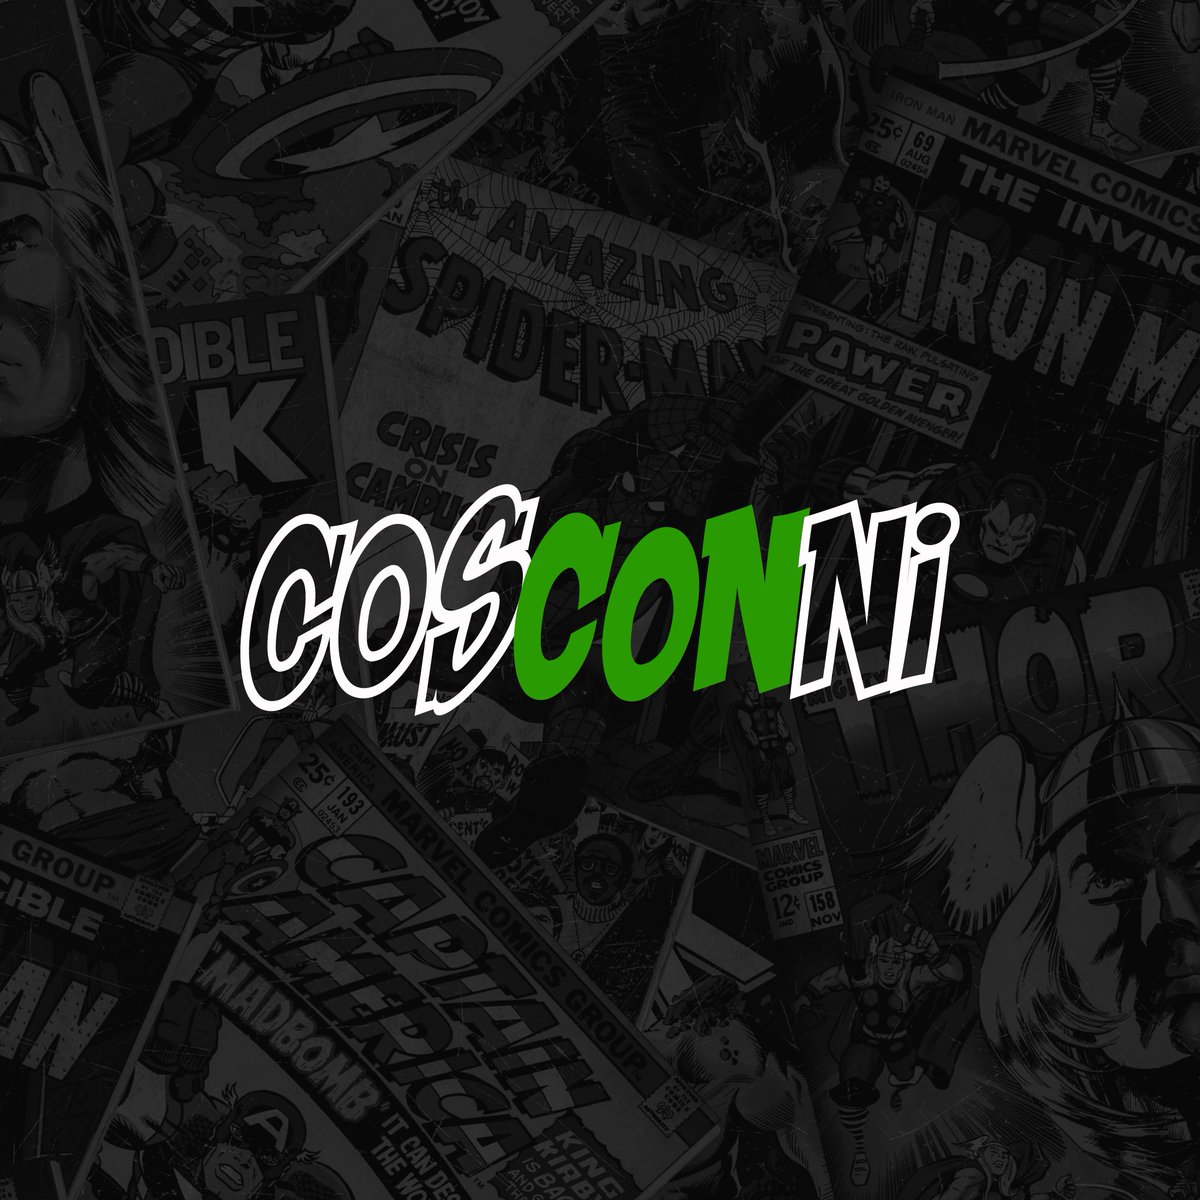 ⛩️ @CosConNI 

📷 Design: @ChrisScottPics

#CosConNI #NorthernIreland #Ireland #Cosplay #CosplayWorld #Cosplays #Belfast #Dublin #CosplayPhotography #Comic #Follow #Retweet